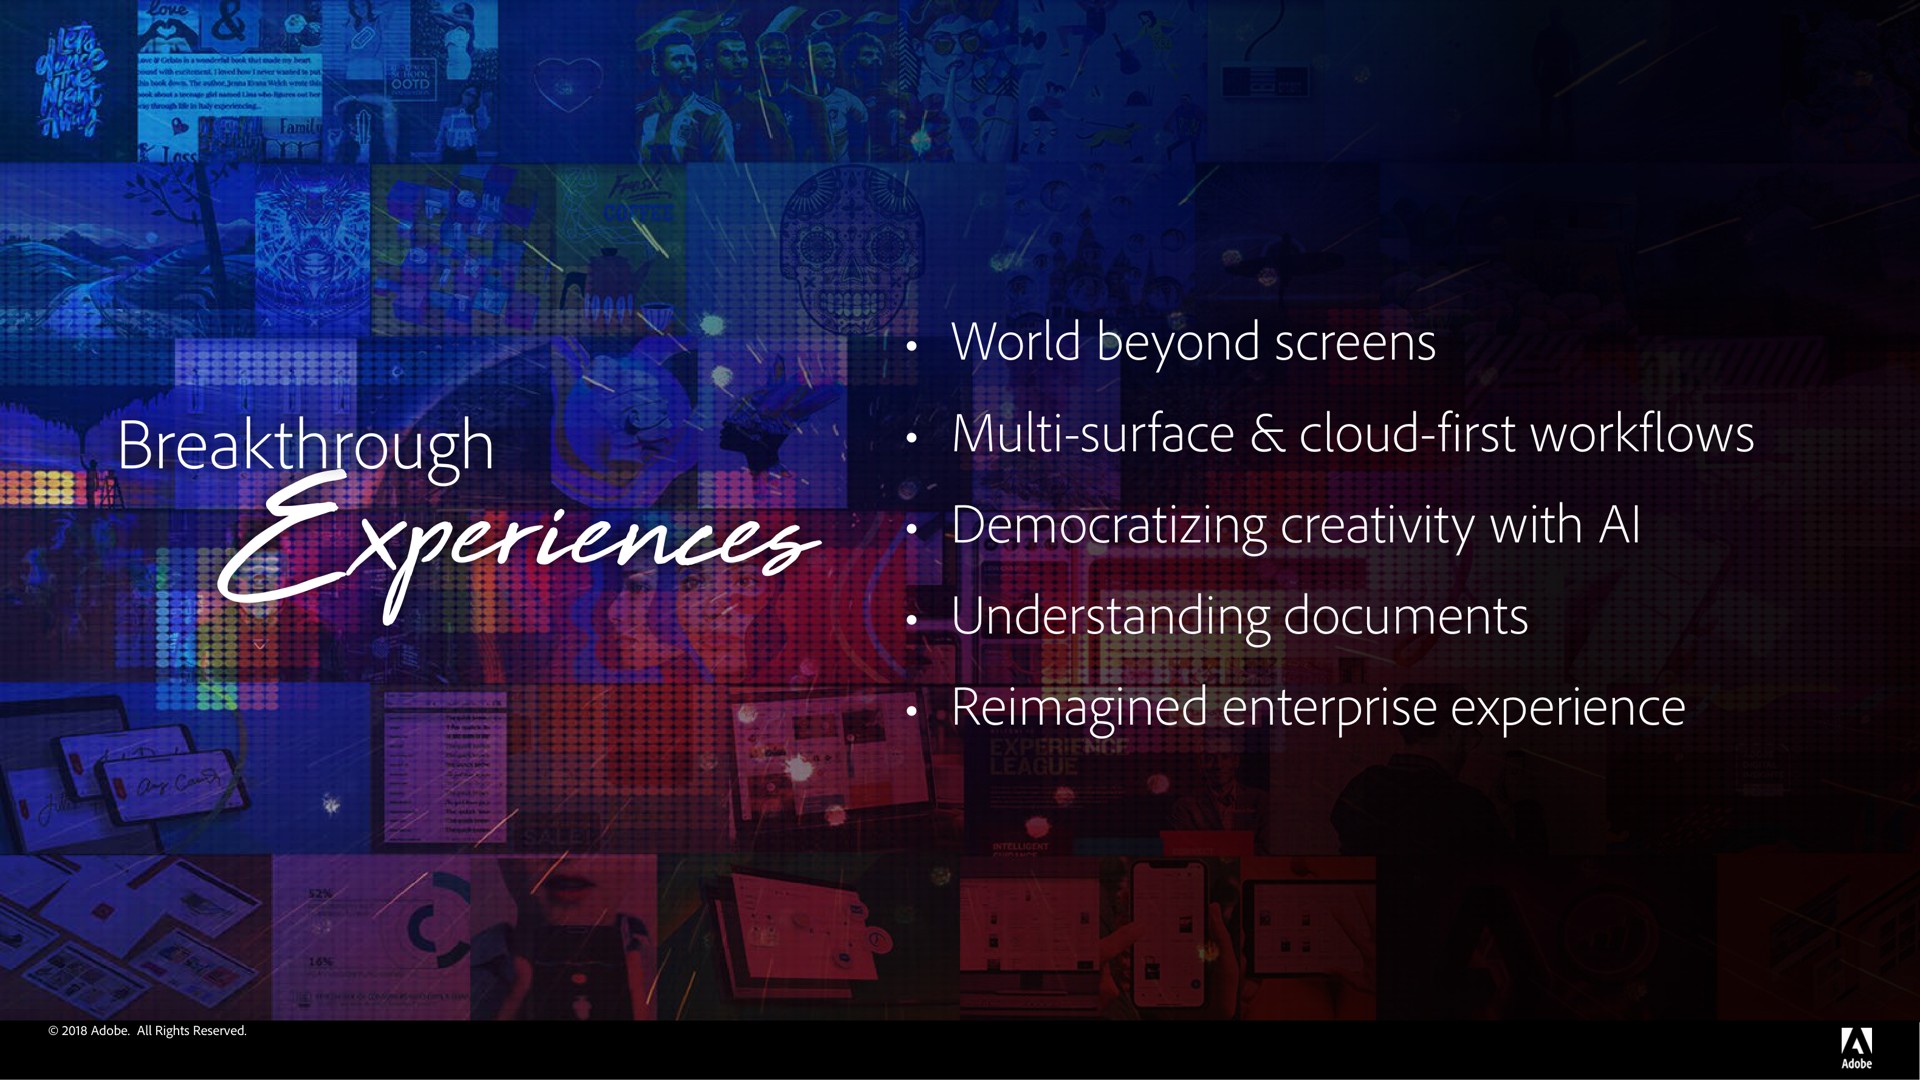 world beyond screens surface cloud first democratizing creativity with understanding documents enterprise experience breakthrough | Adobe